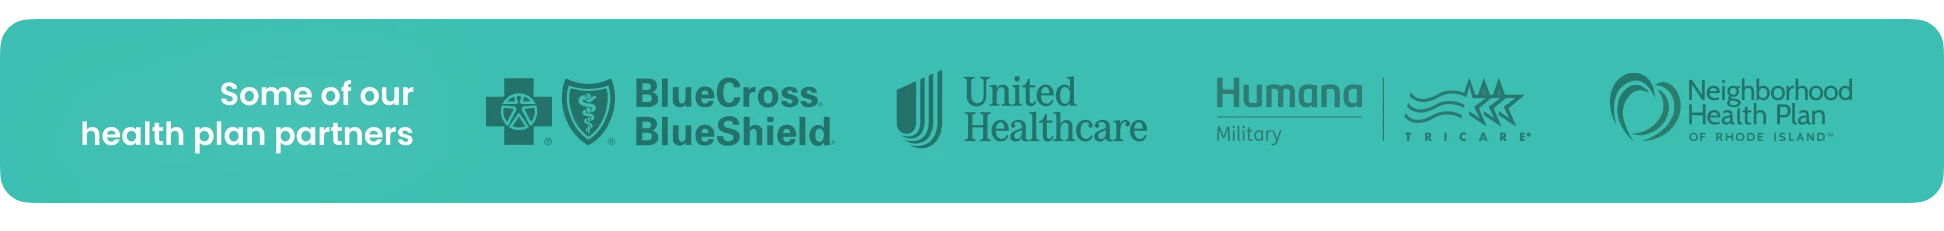 health-care-partner-logos